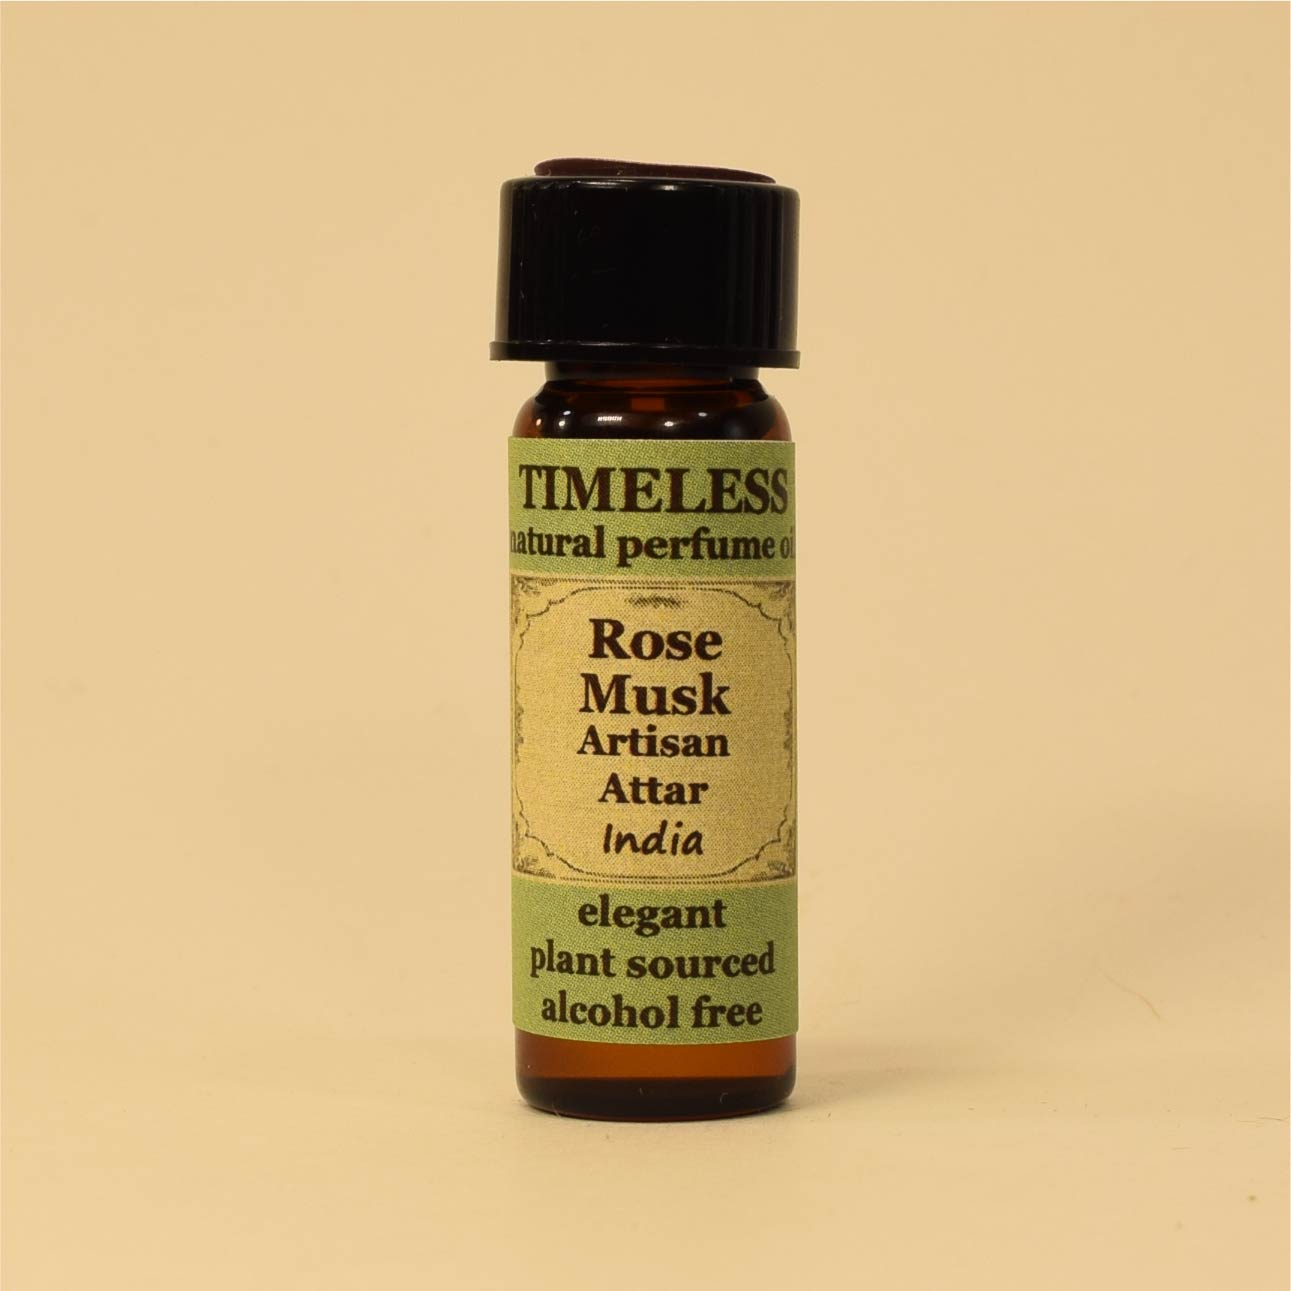 TIMELESS Rose Musk Attar - elegant plant-sourced perfume, alcohol